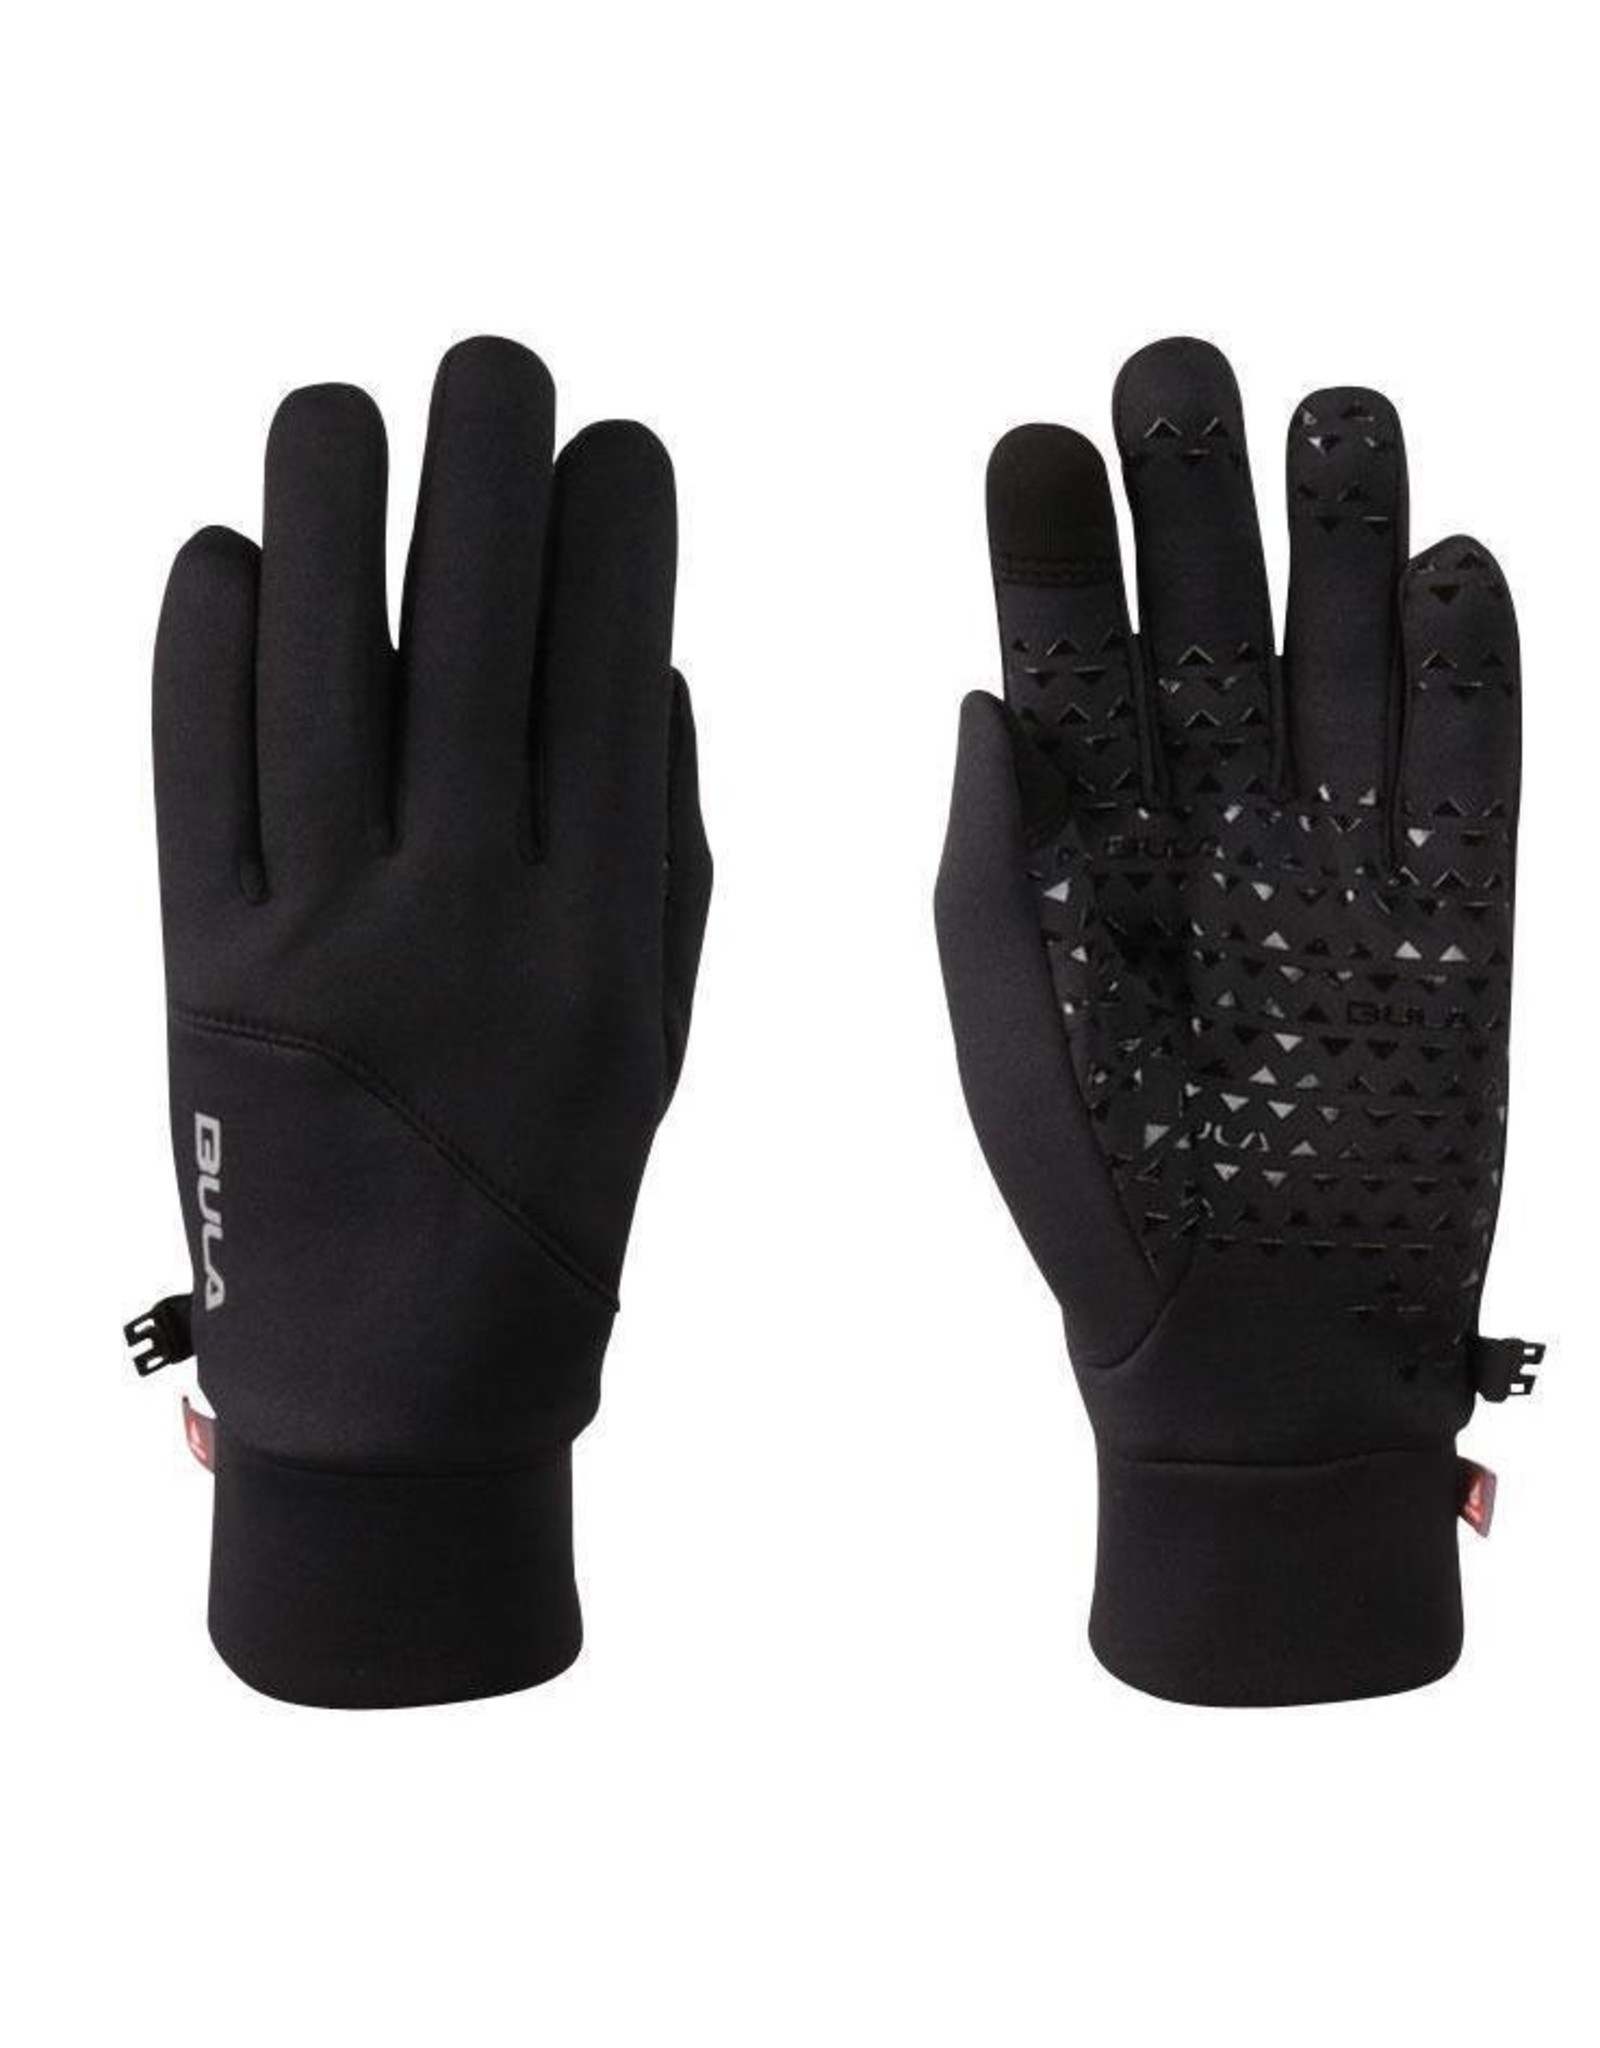 BULA Bula Polartec Stretch Gloves